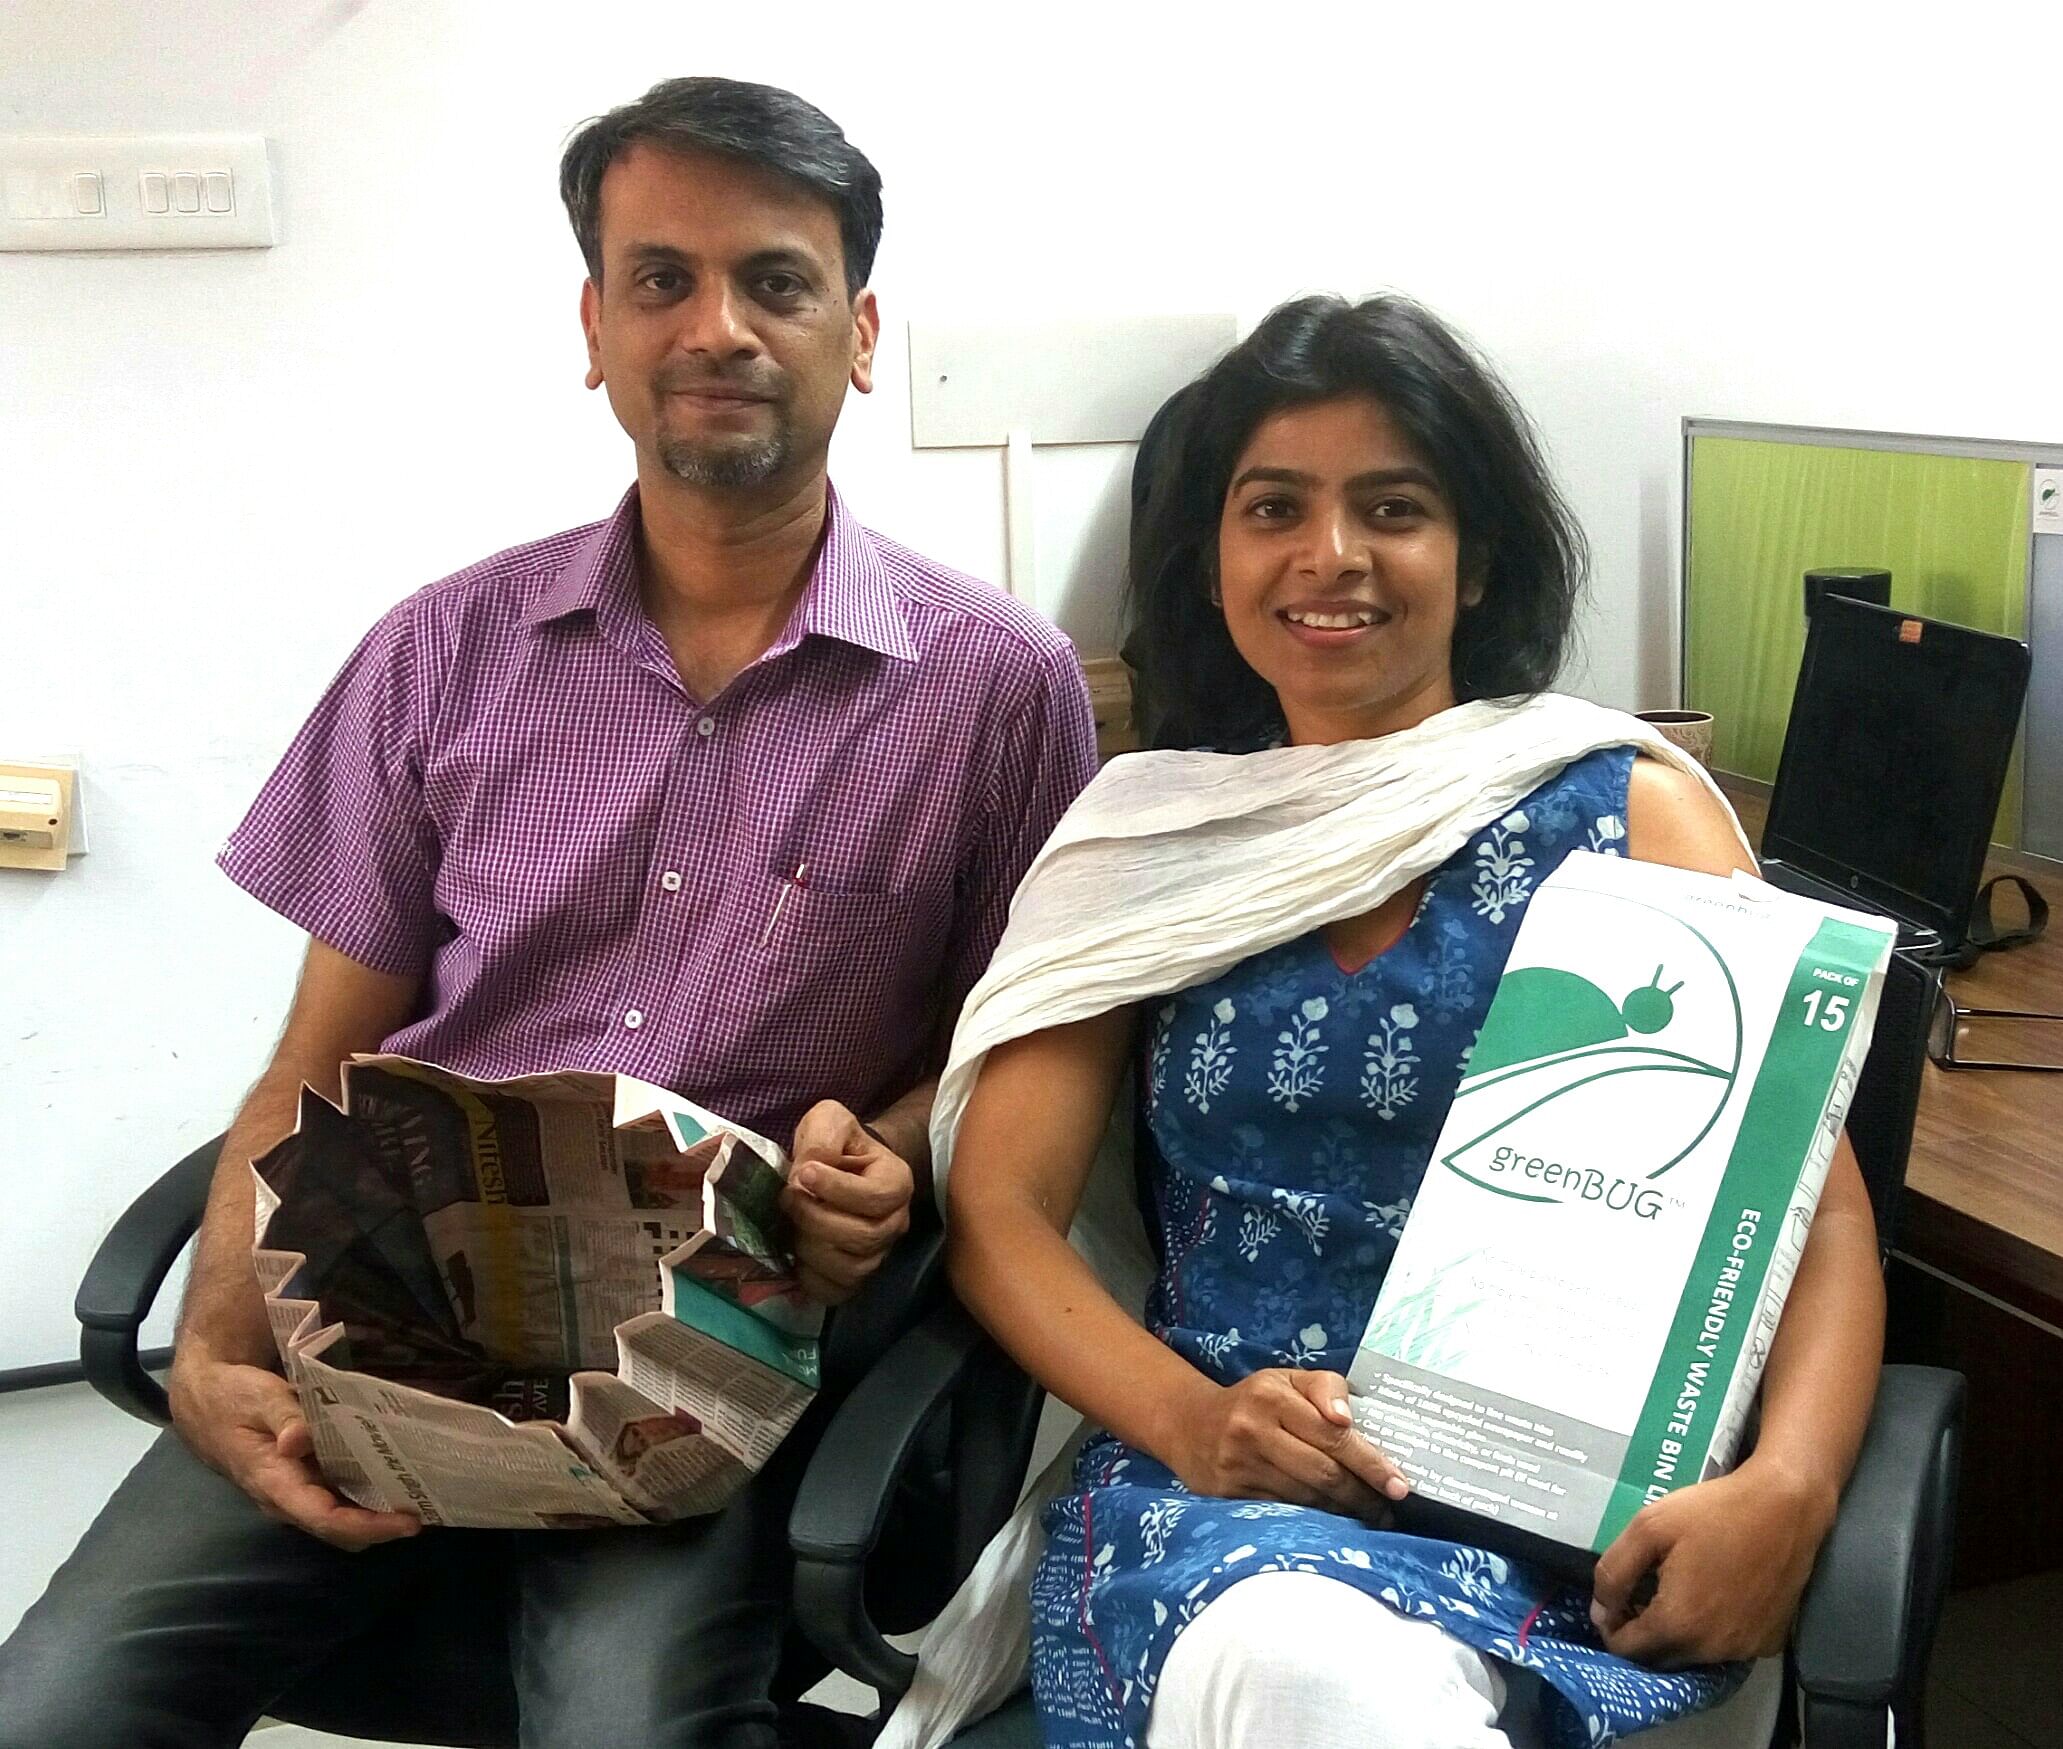 Arun Balachandran and Jyoti Pahadsingh, founders of greenBUG